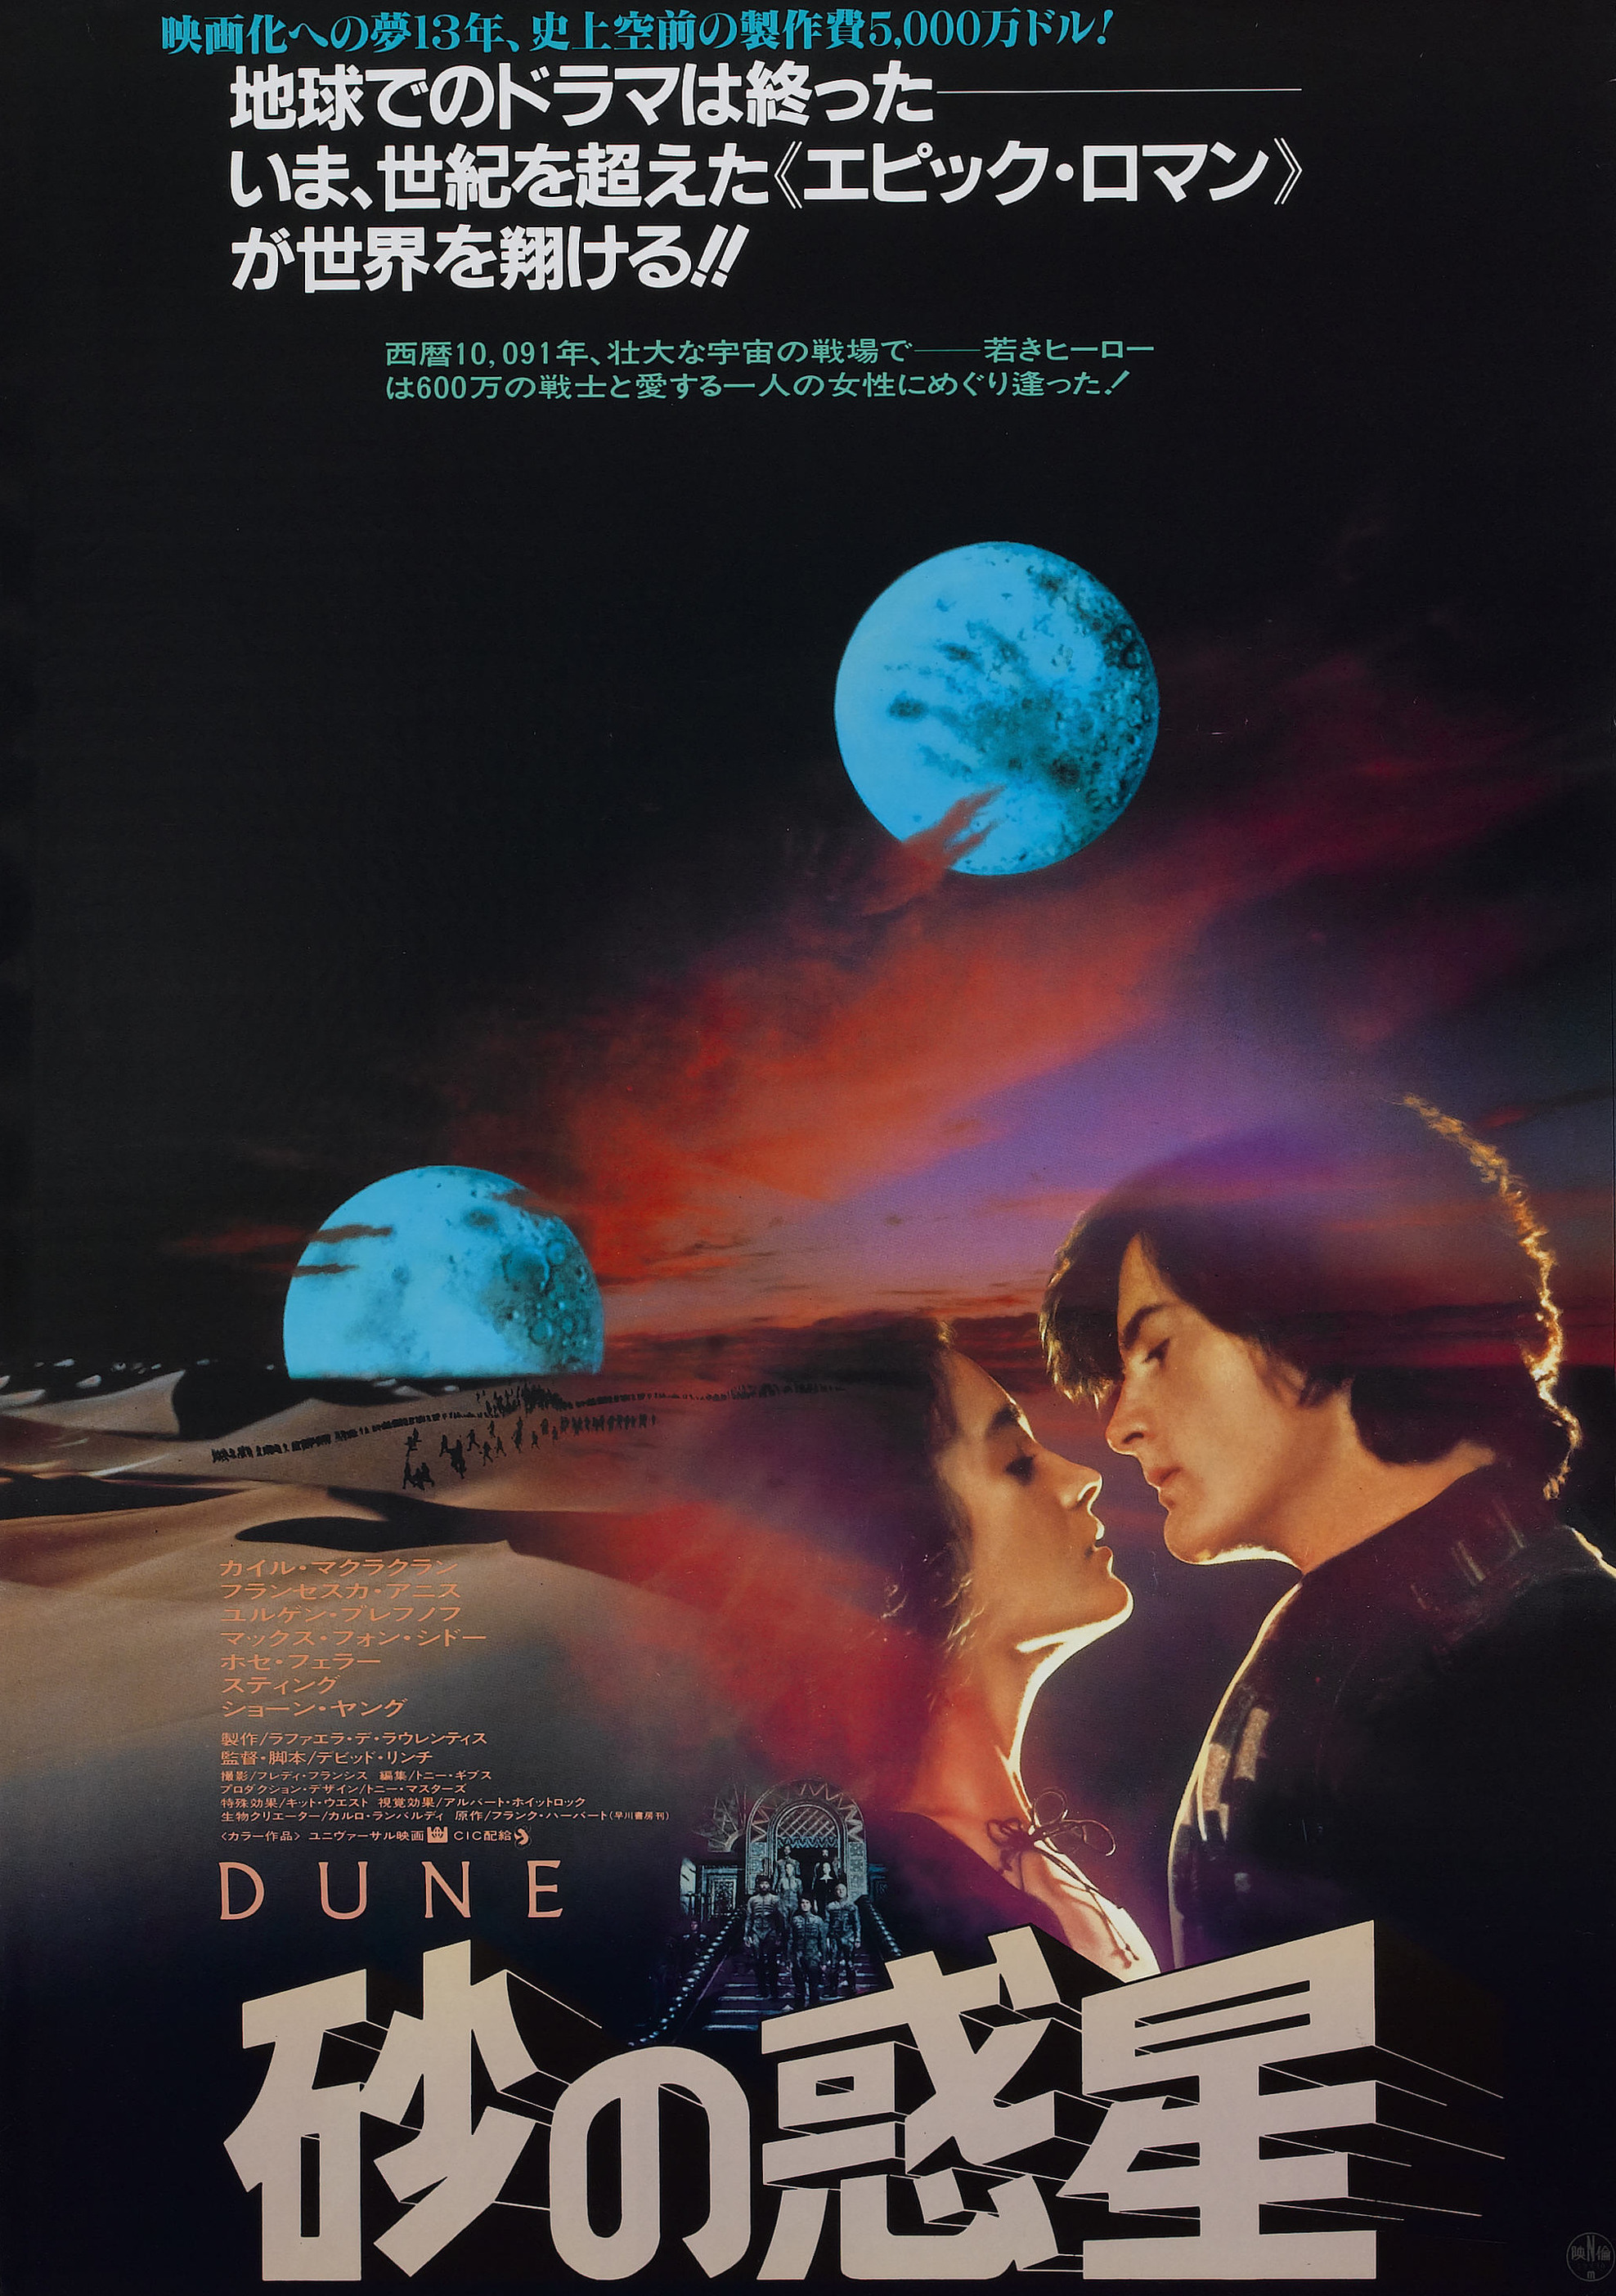 Mega Sized Movie Poster Image for Dune (#7 of 7)